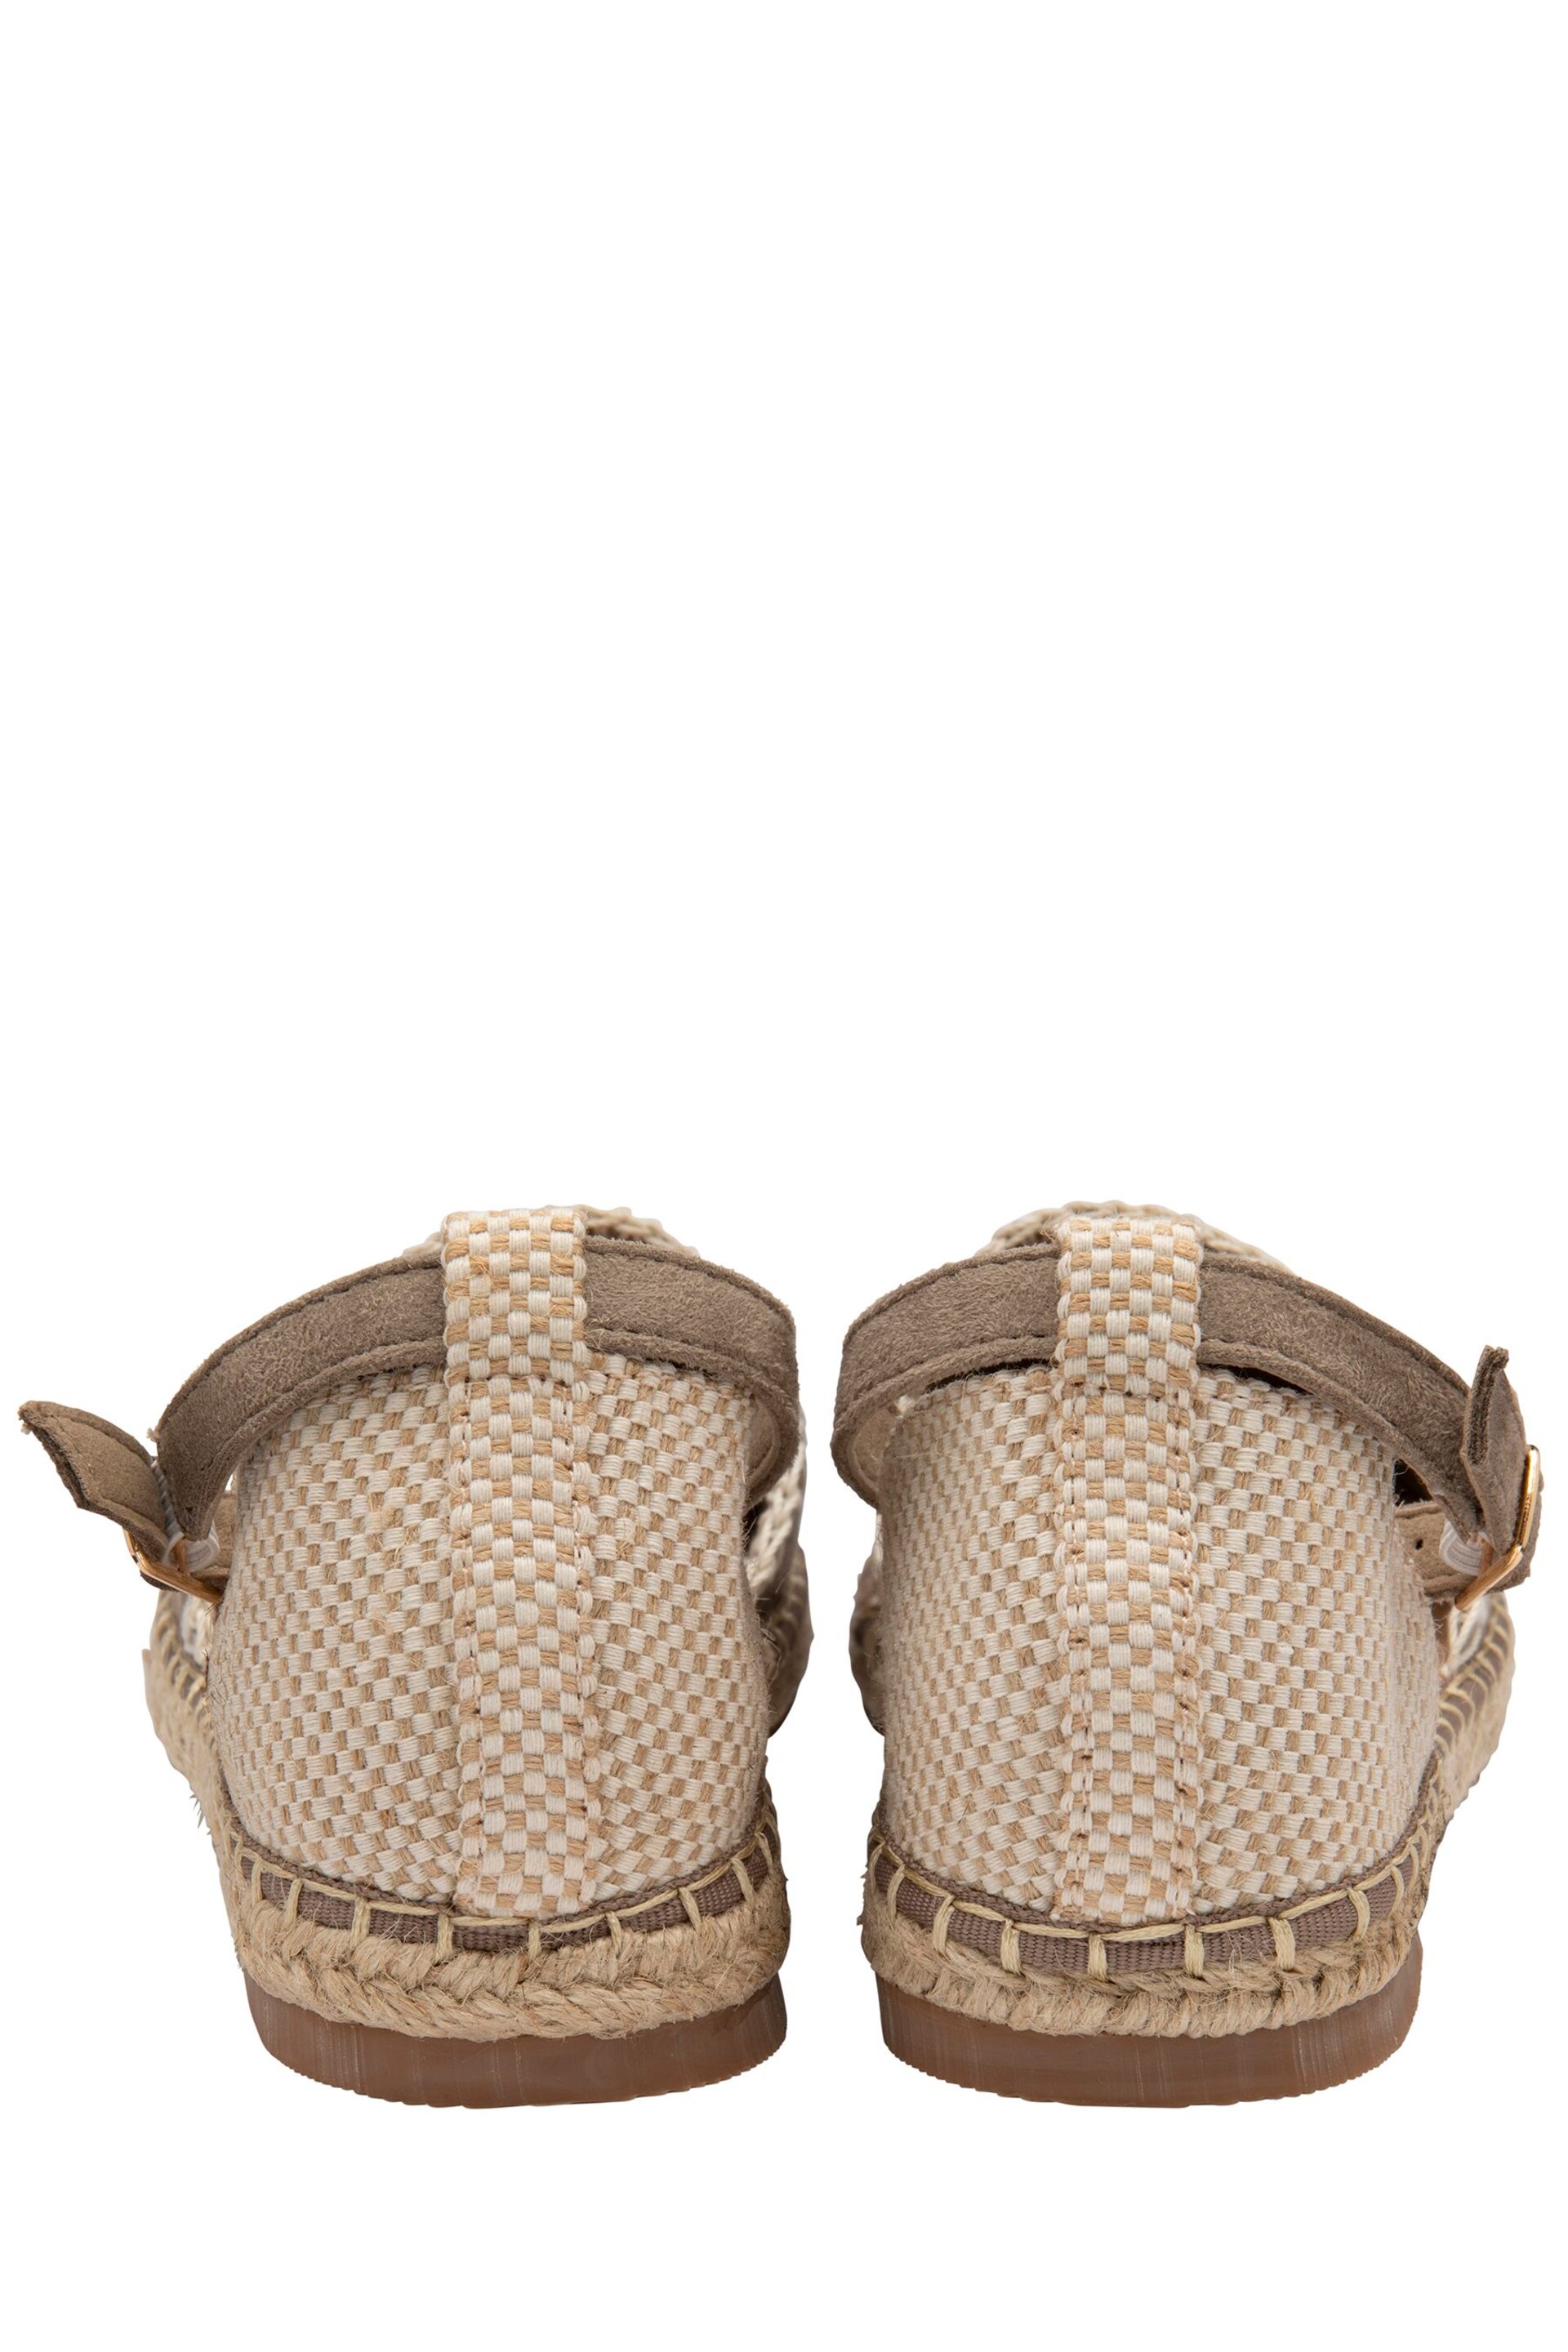 Dunlop light Brown Flat Espadrille Sandals - Image 3 of 4